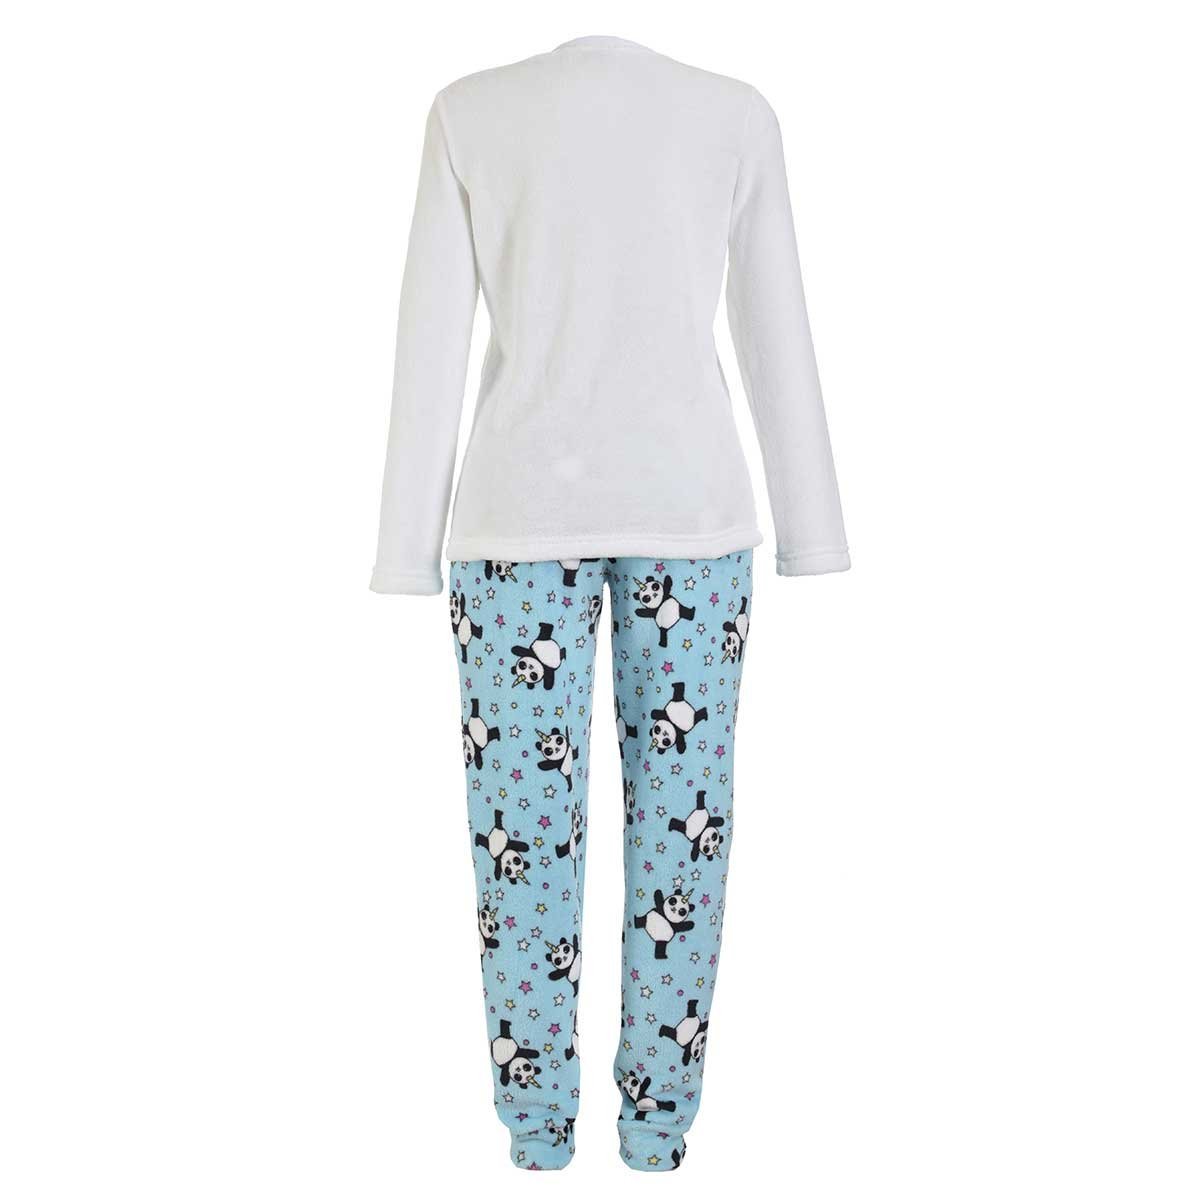 Pijama Flannel Estampado de Pandas Incanto